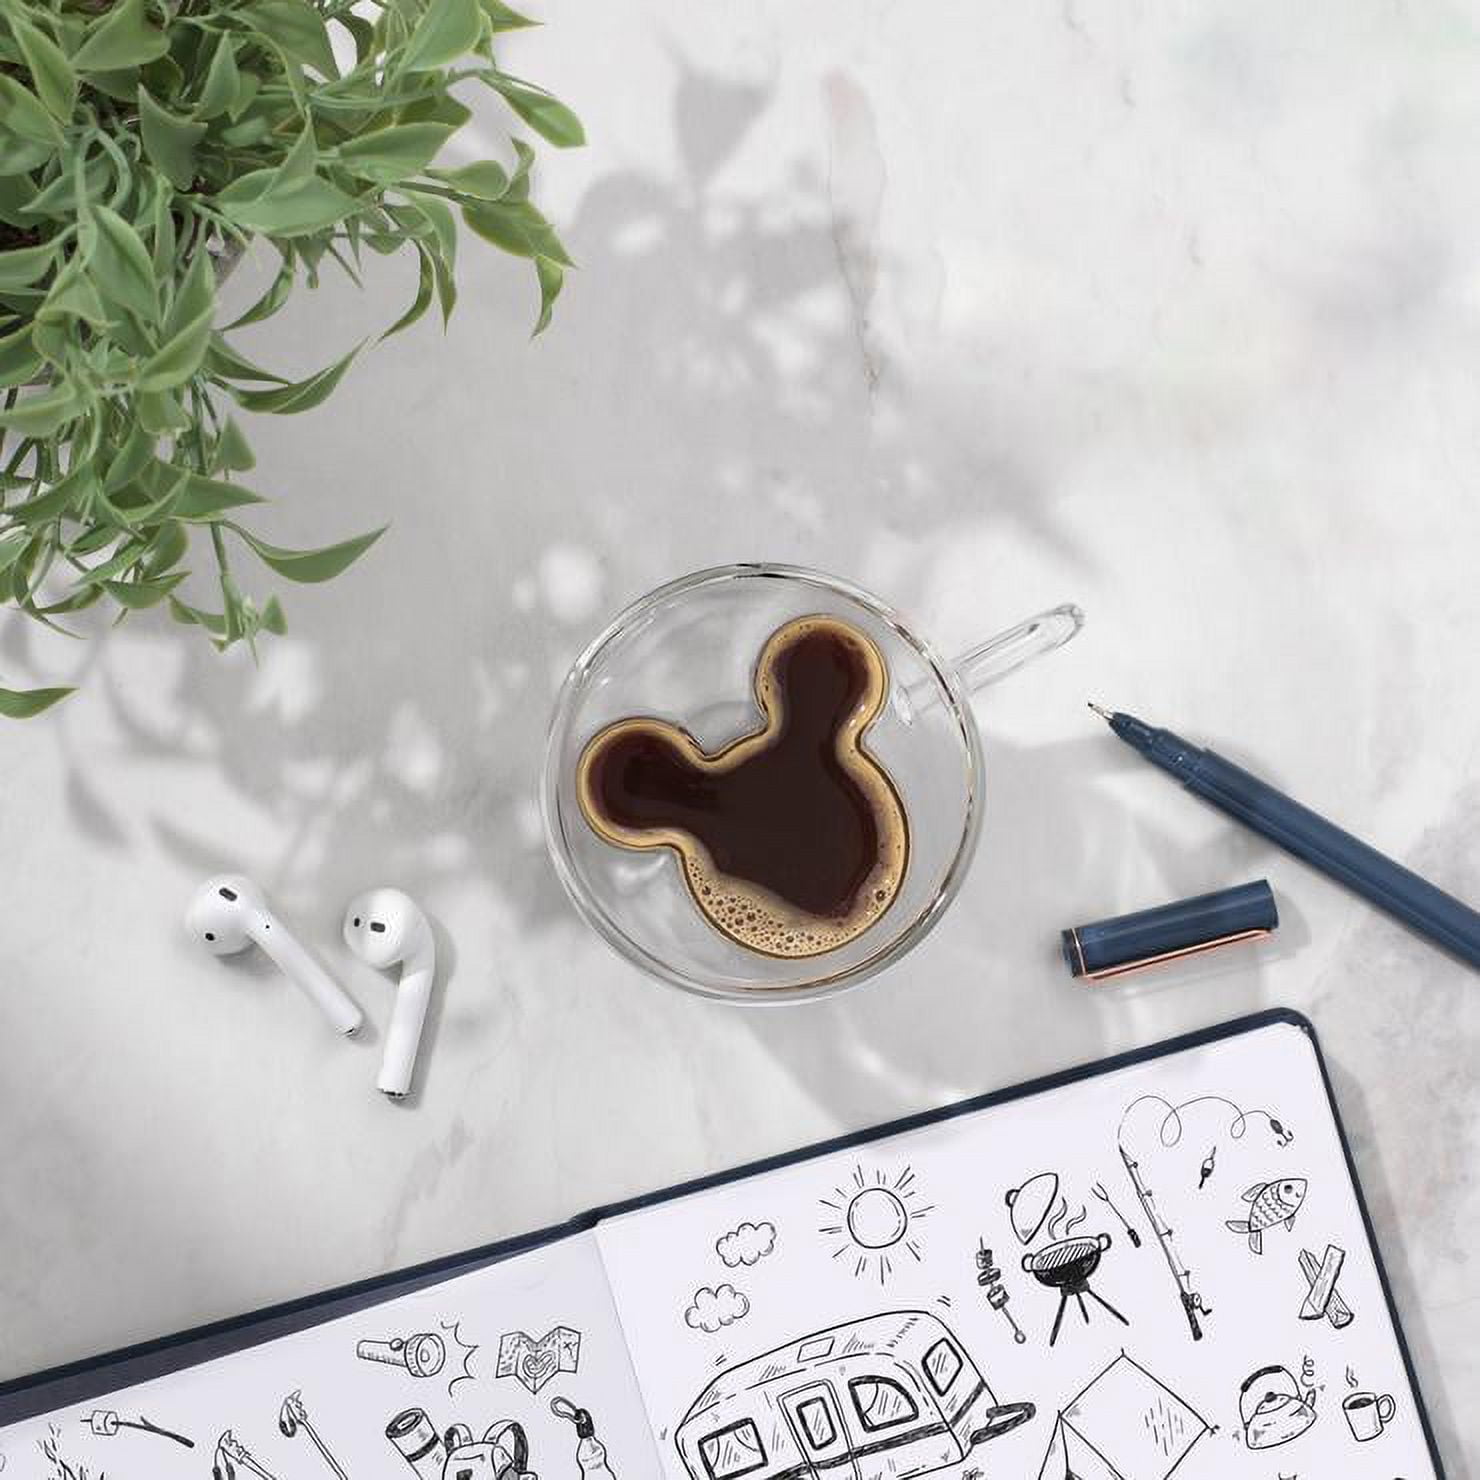 JoyJolt Disney Mickey Mickey 3D Shaped Double Wall Coffee Tea Mugs - 10 oz  - Set of 2 